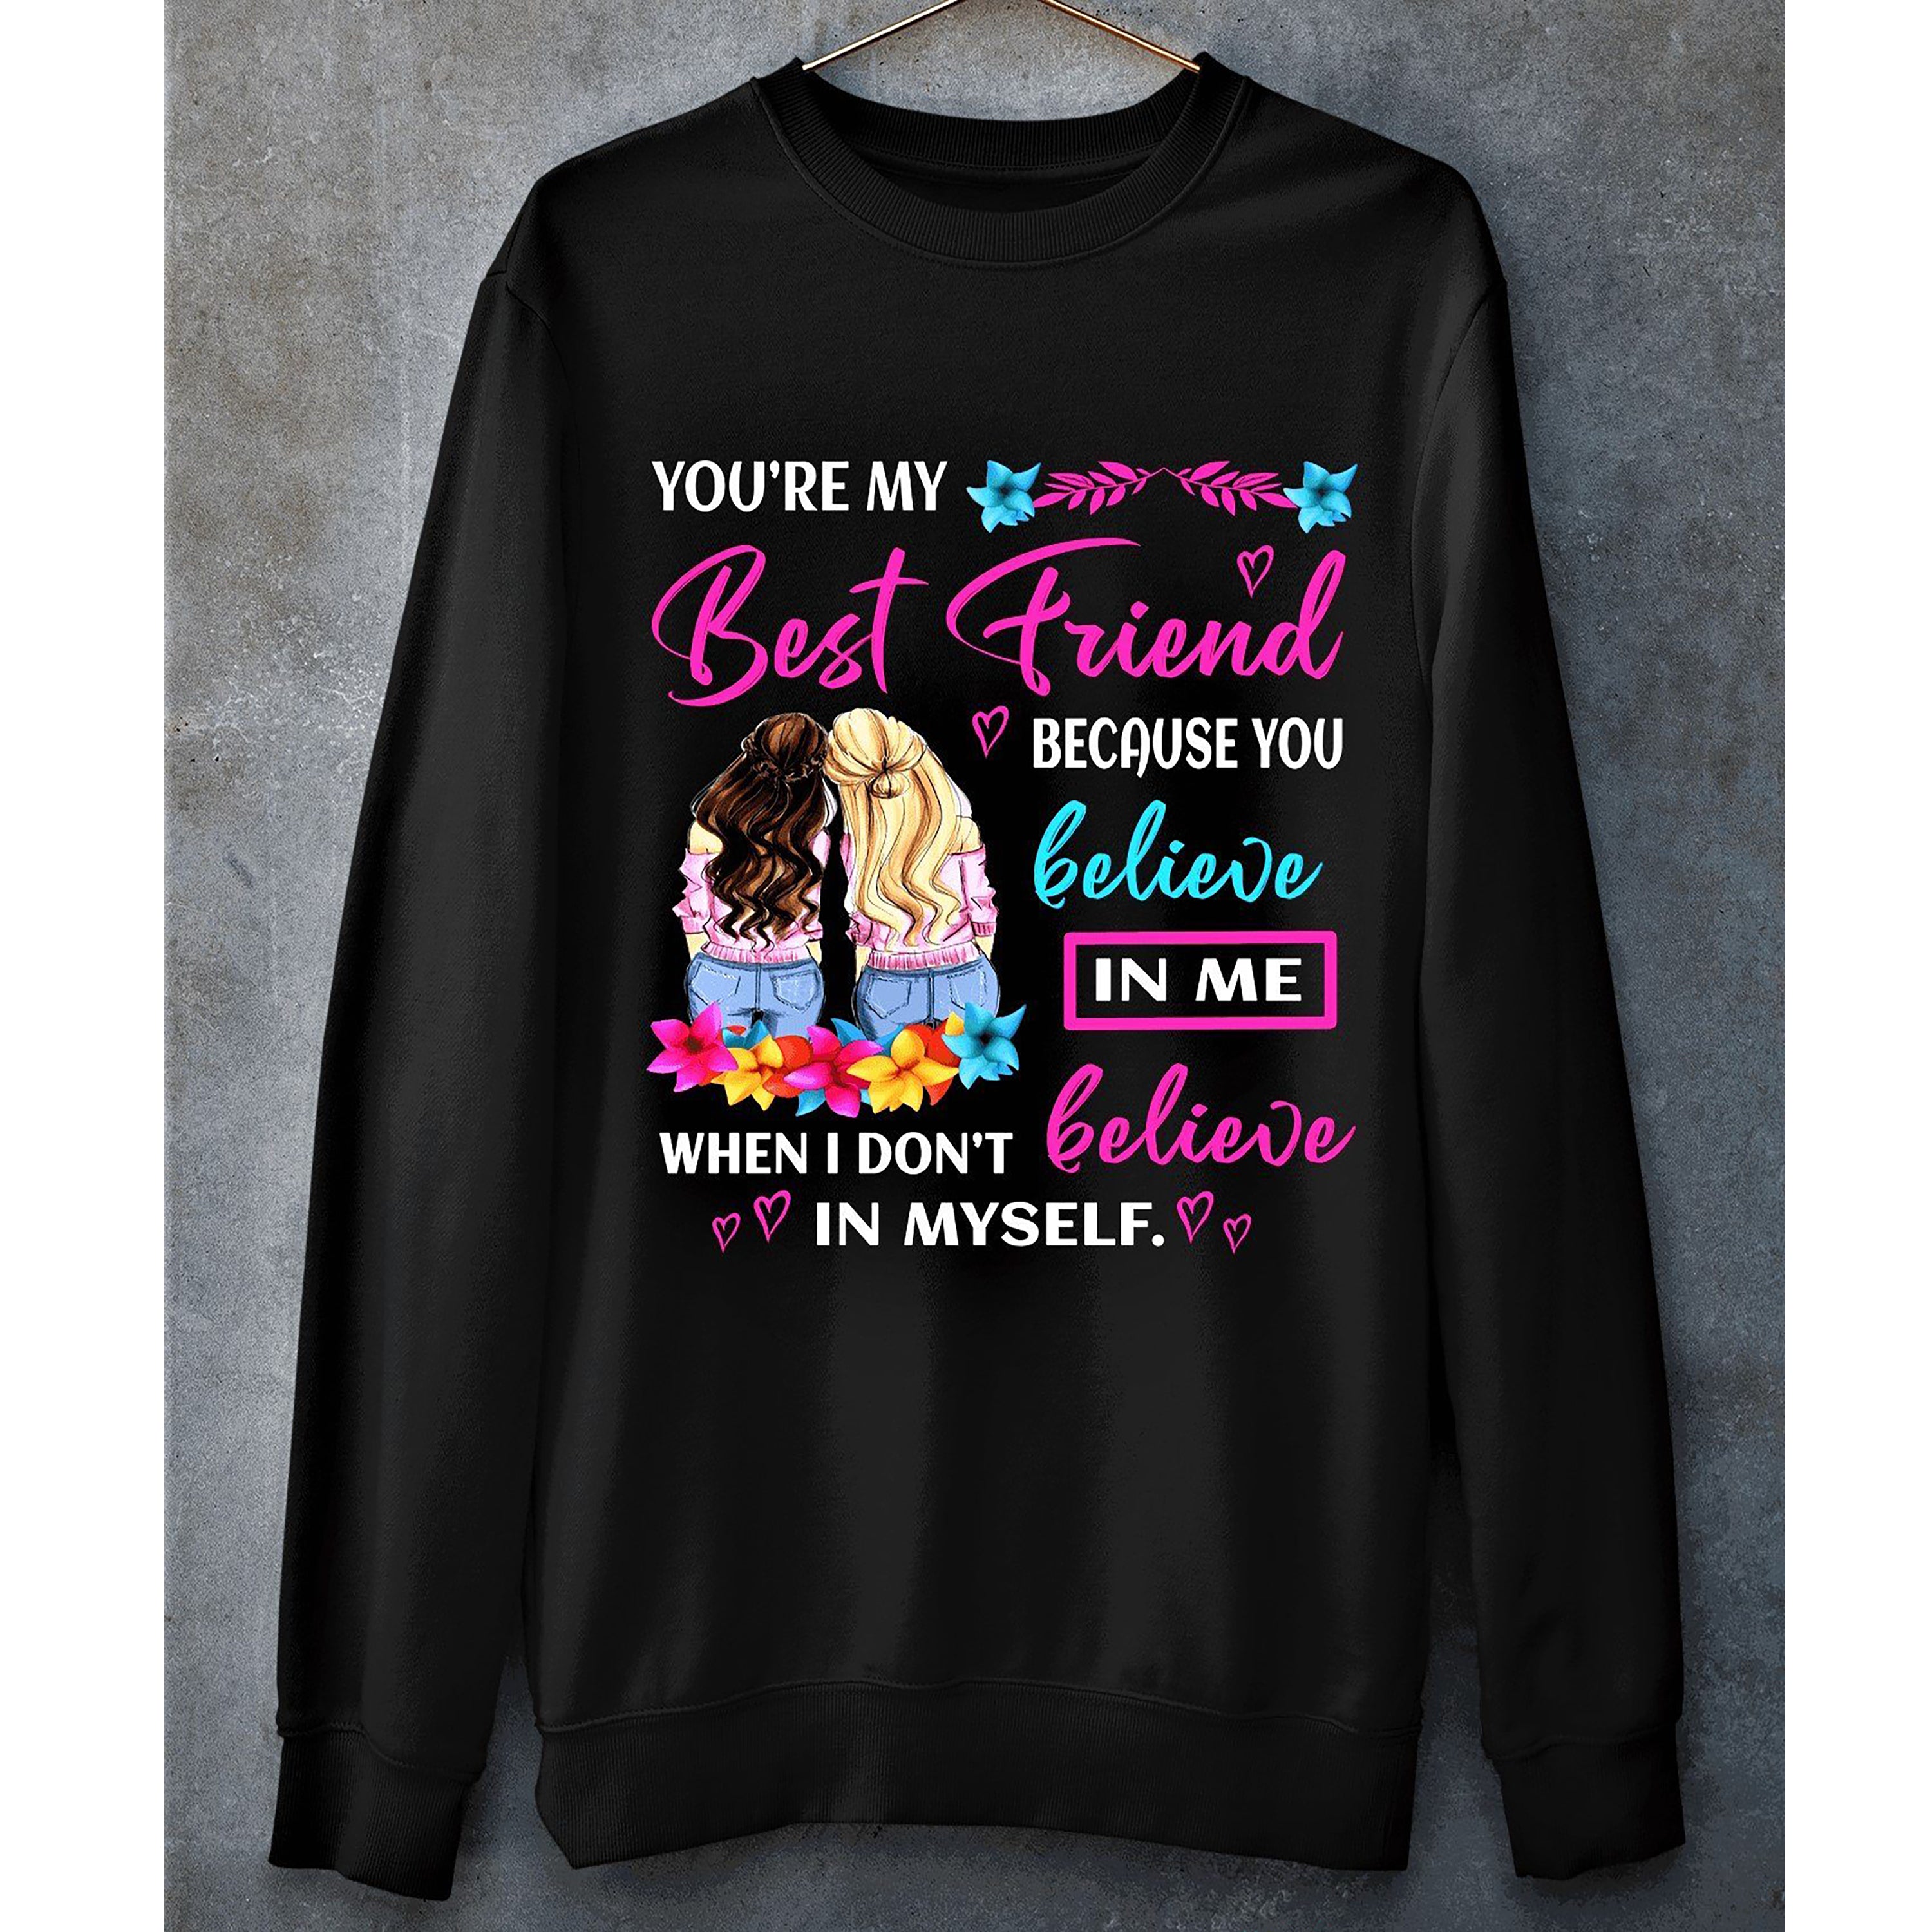 "You're my best friend"